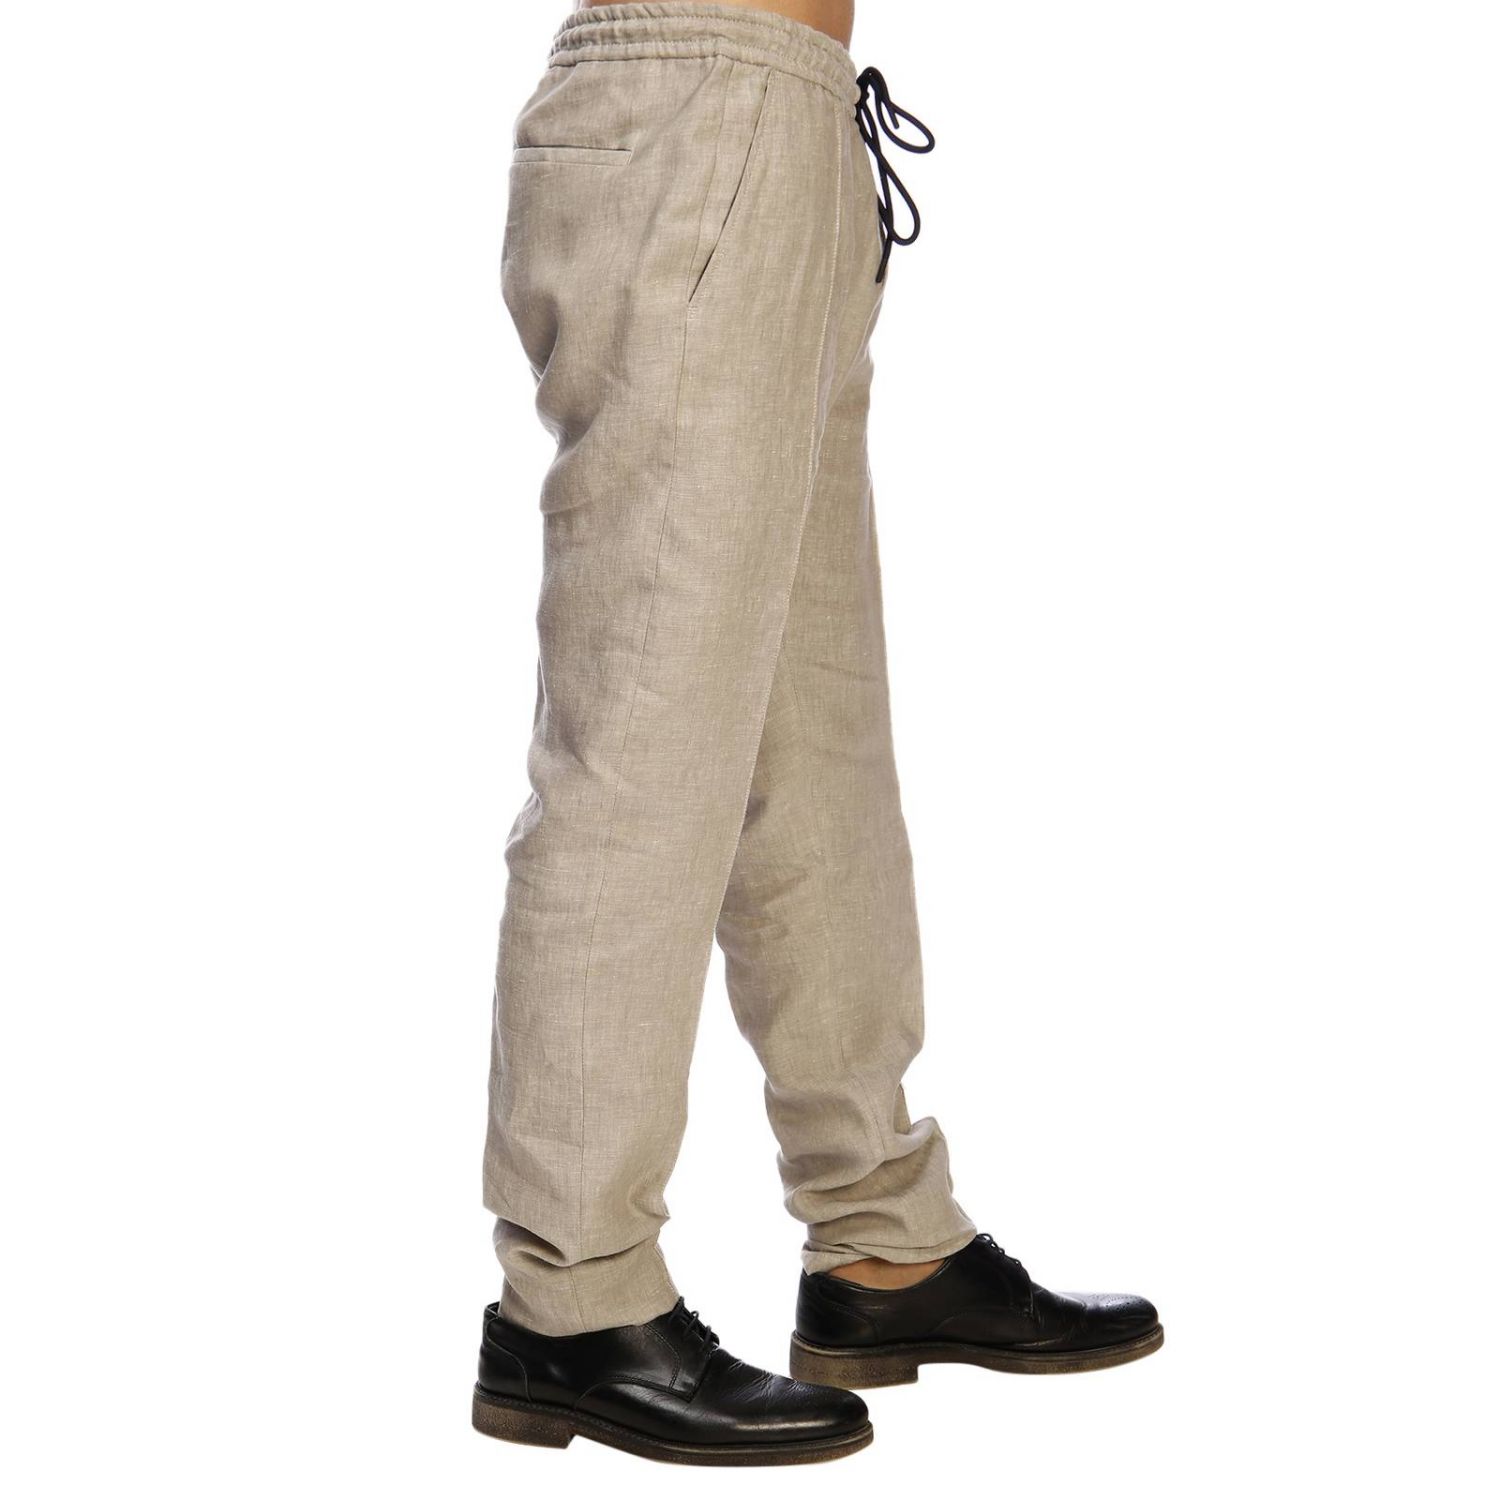 Emporio Armani Outlet: Pants men - Sand | Pants Emporio Armani 21P89S ...